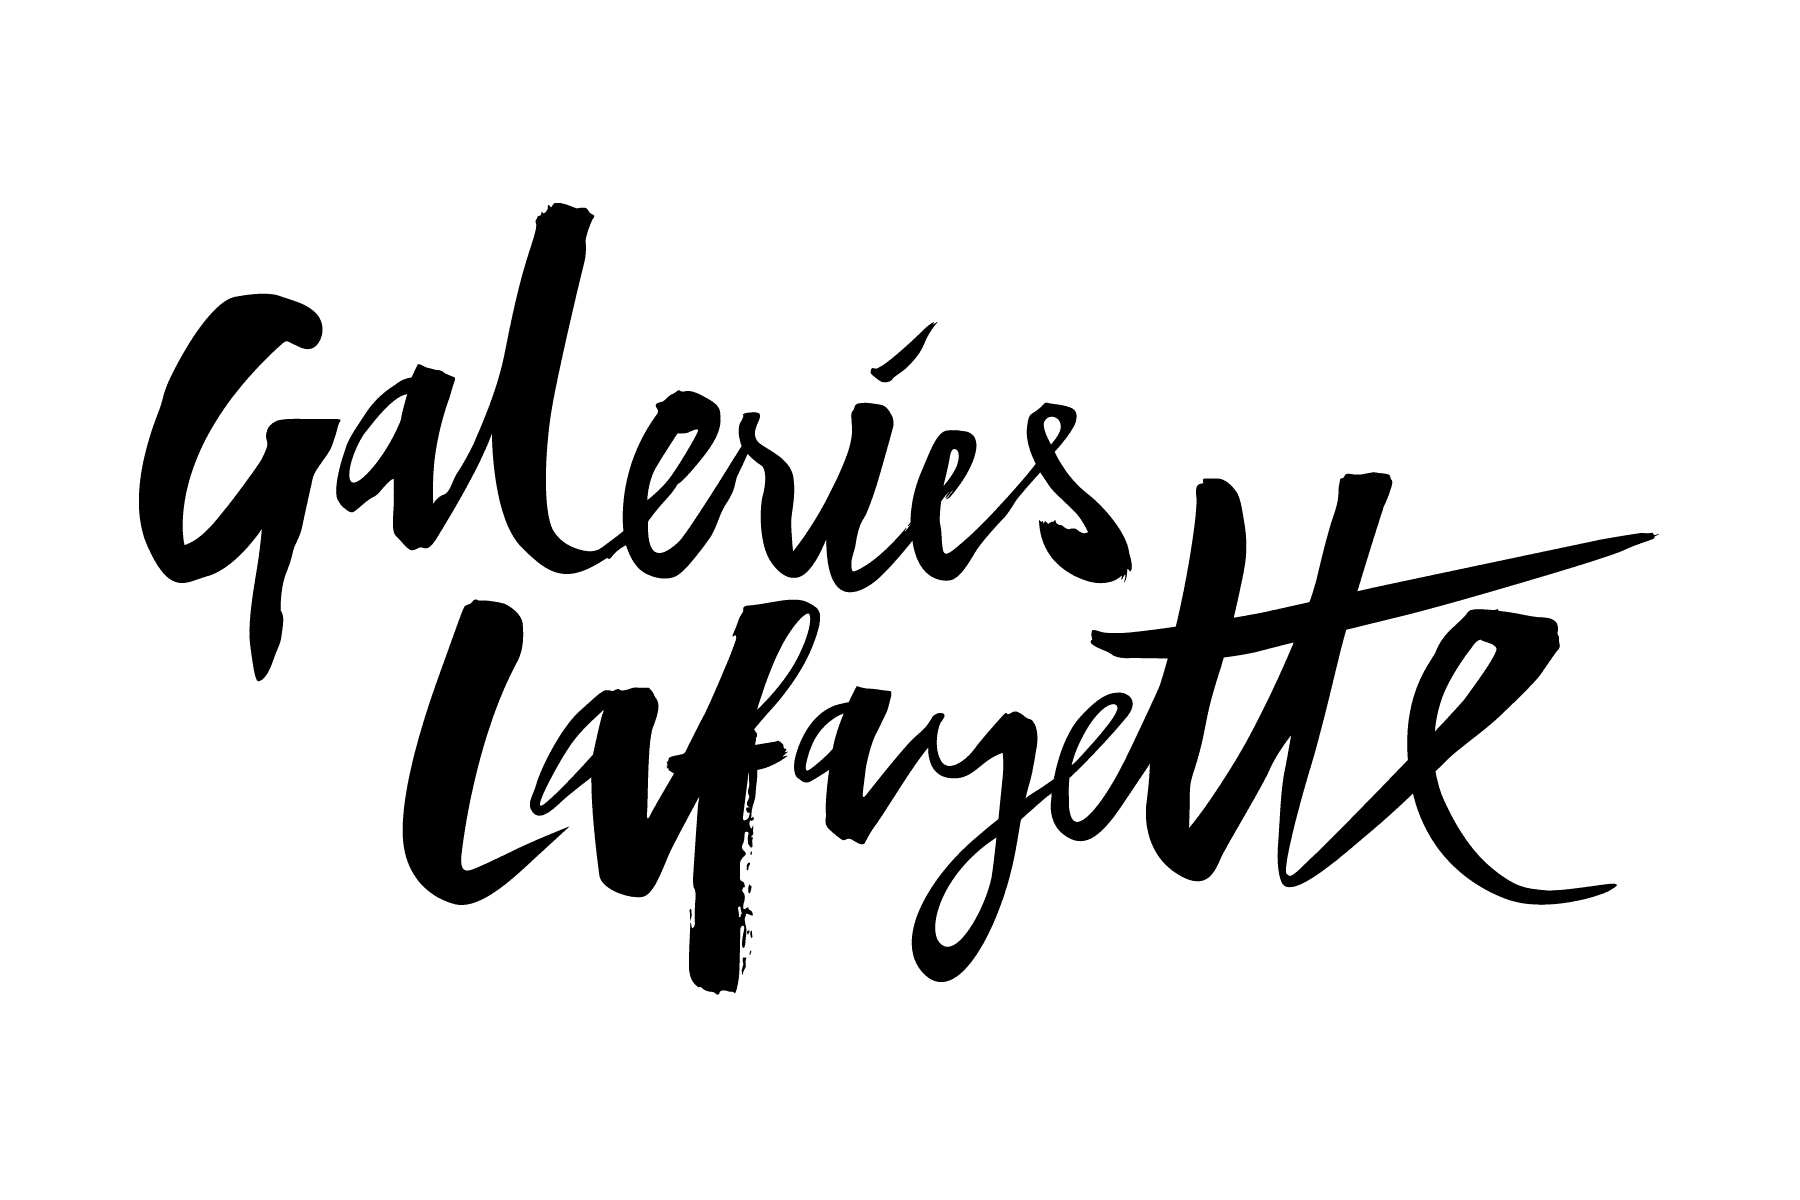 Galerie Lafayette